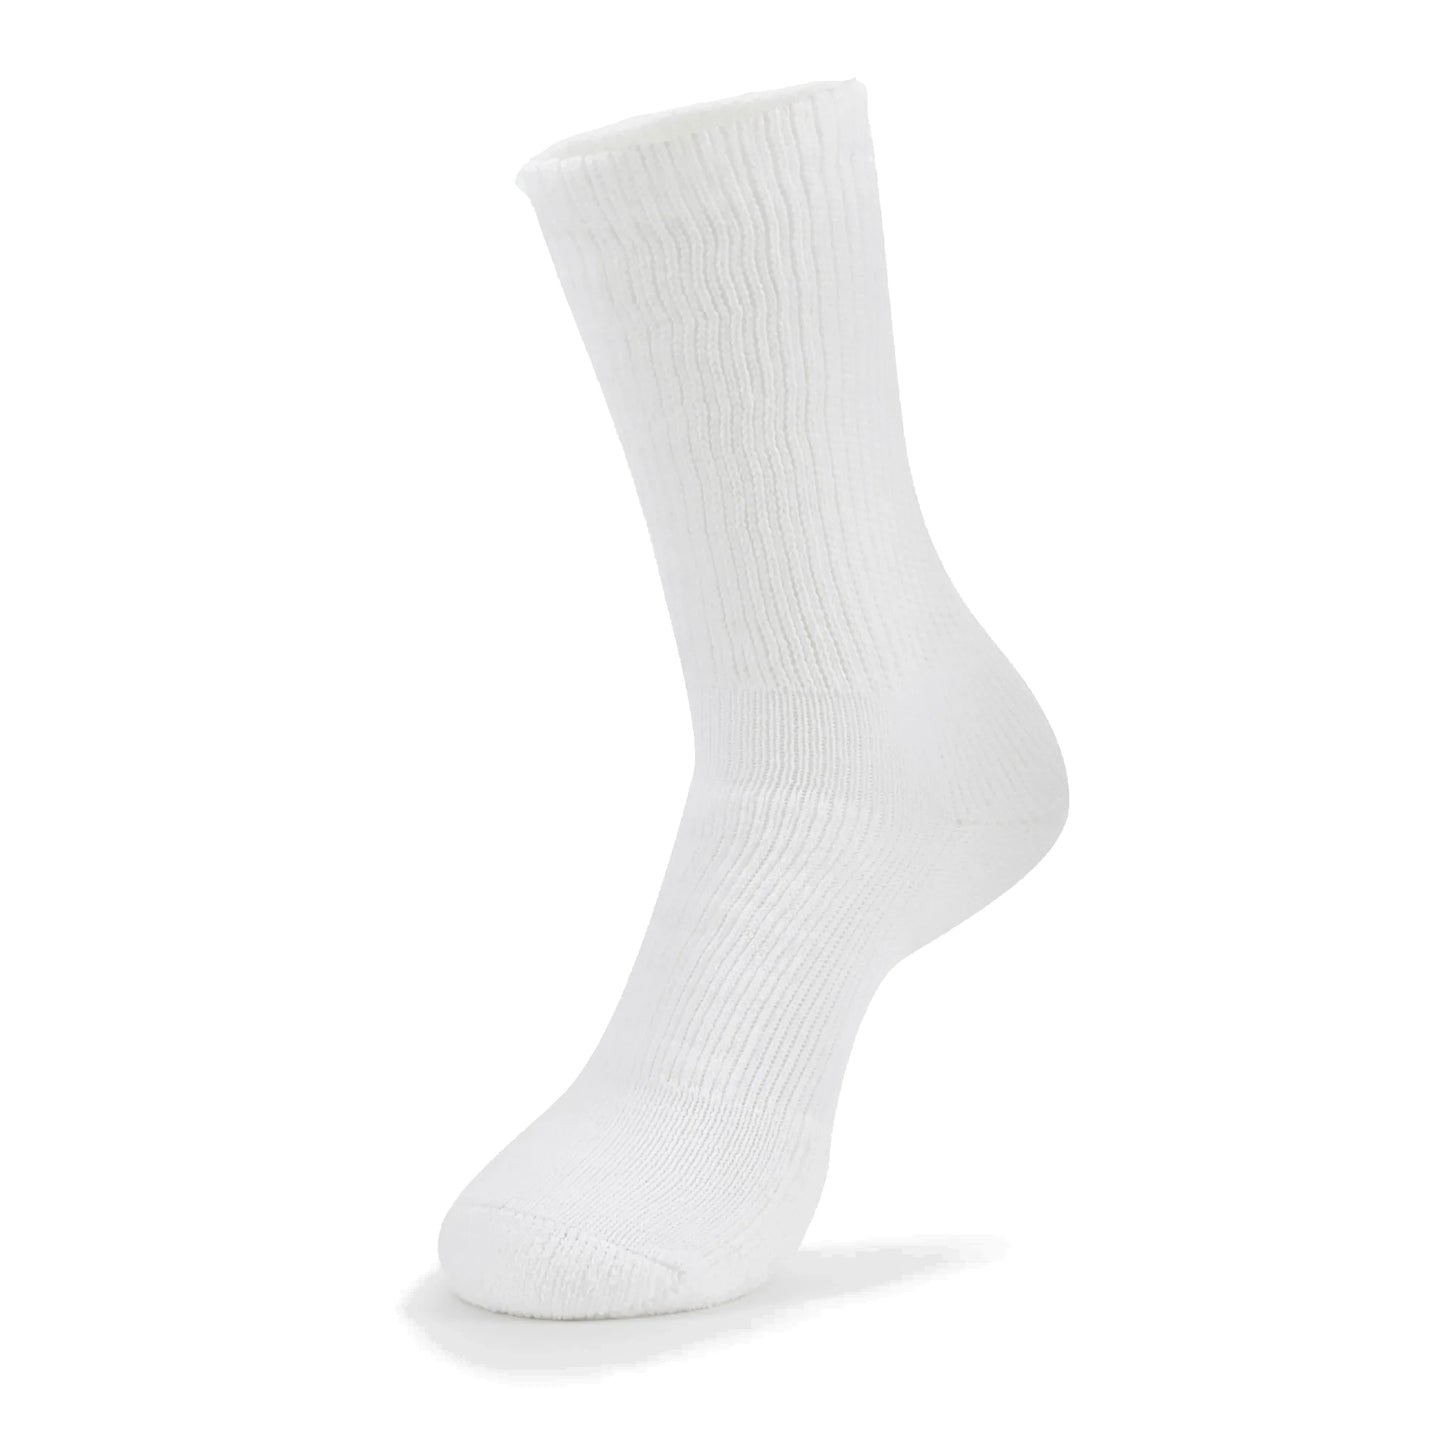 Thorlos Moderate Cushion Crew Walking Socks - White